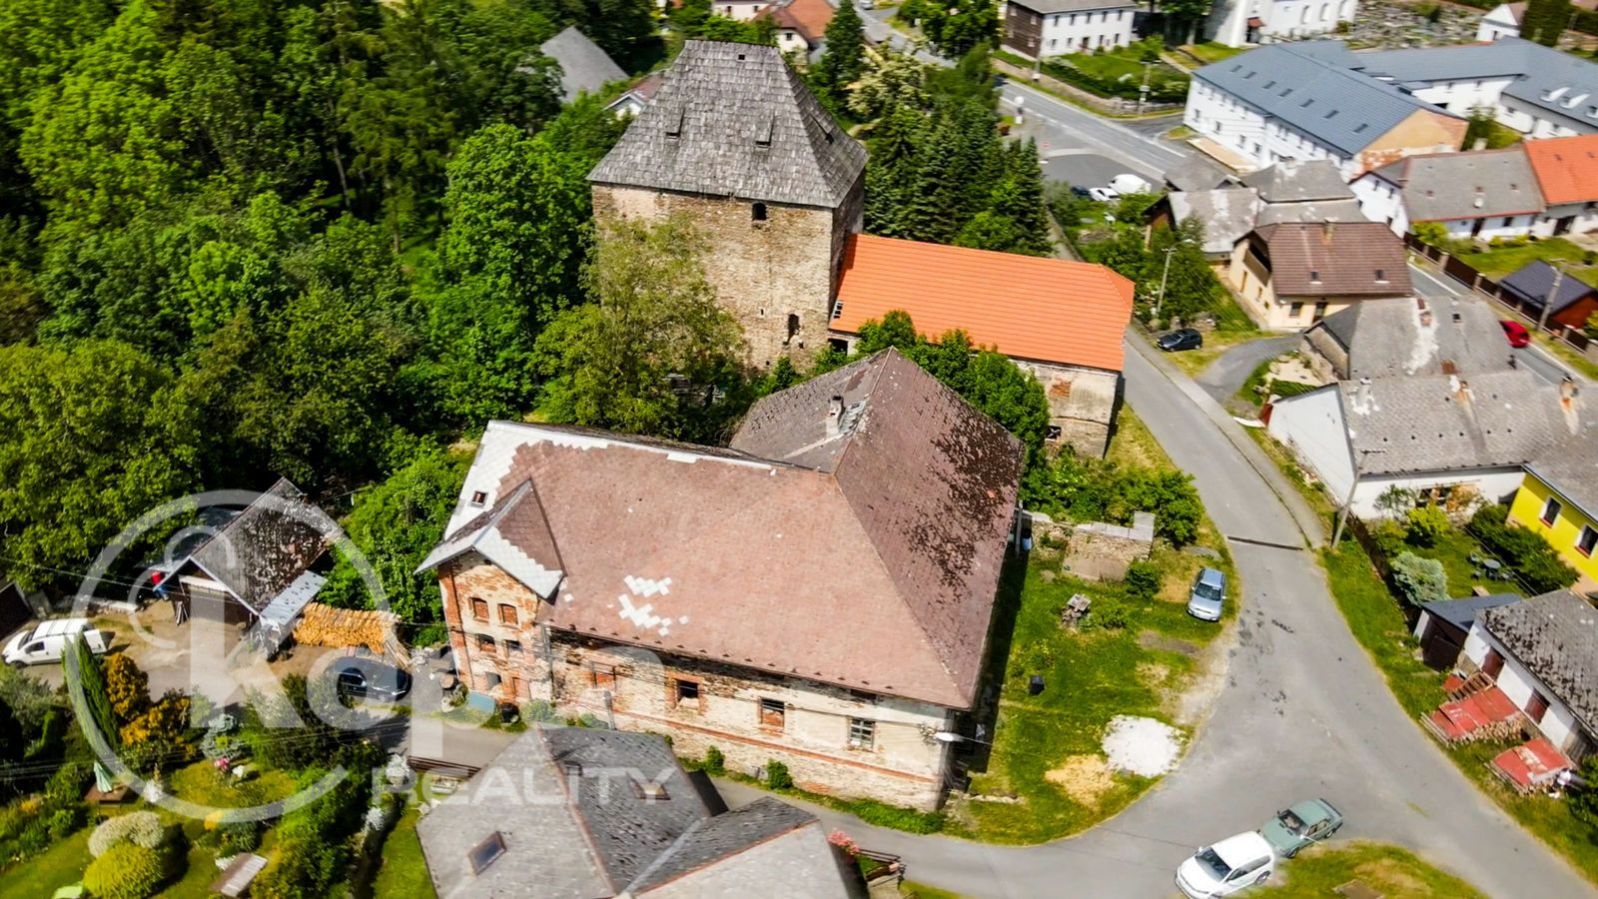 Objekt bývalého pivovaru, parcela 4.200 m2, Čachrov, obrázek č. 1